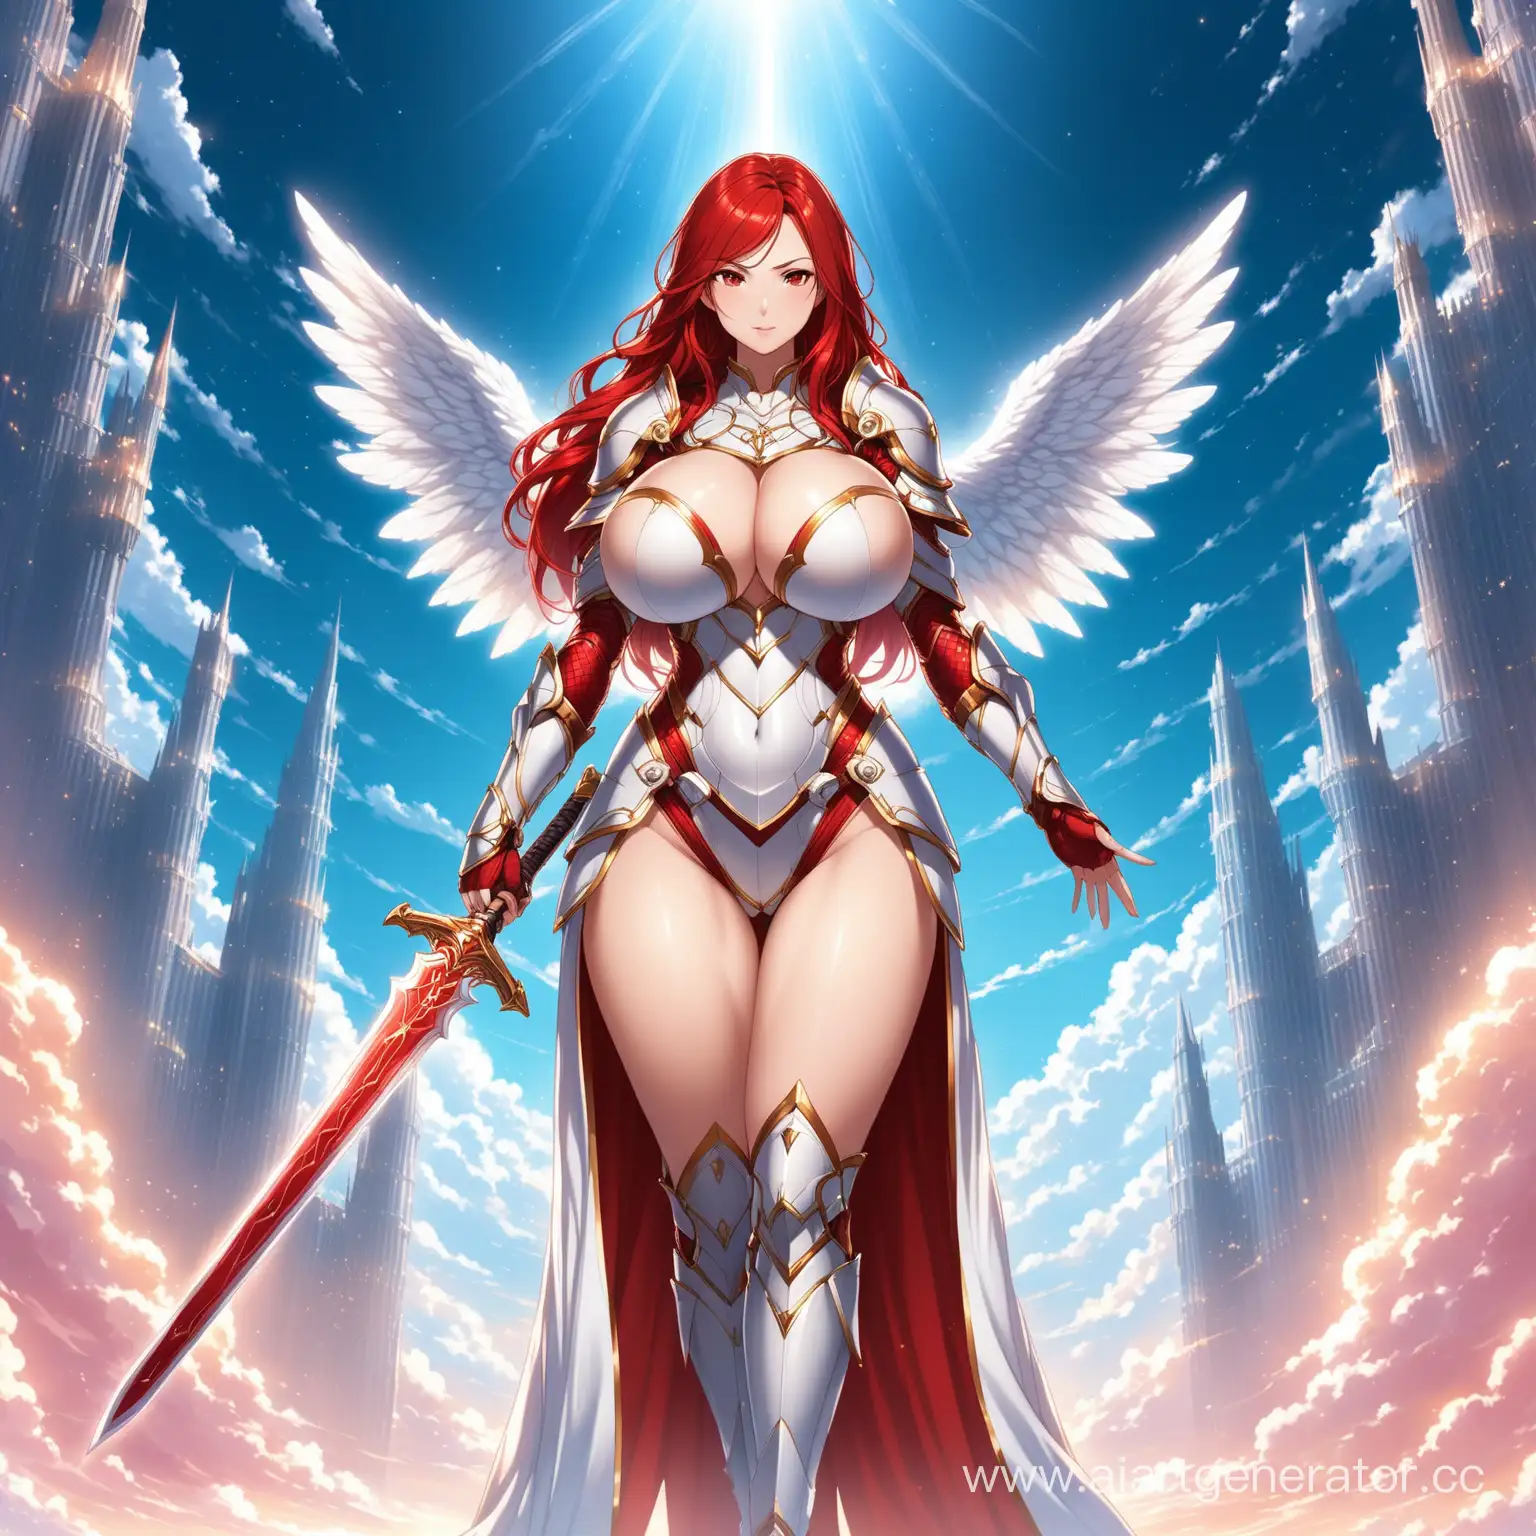 Heavenly-MILF-Angel-Warrior-with-Sword-in-Light-Armor